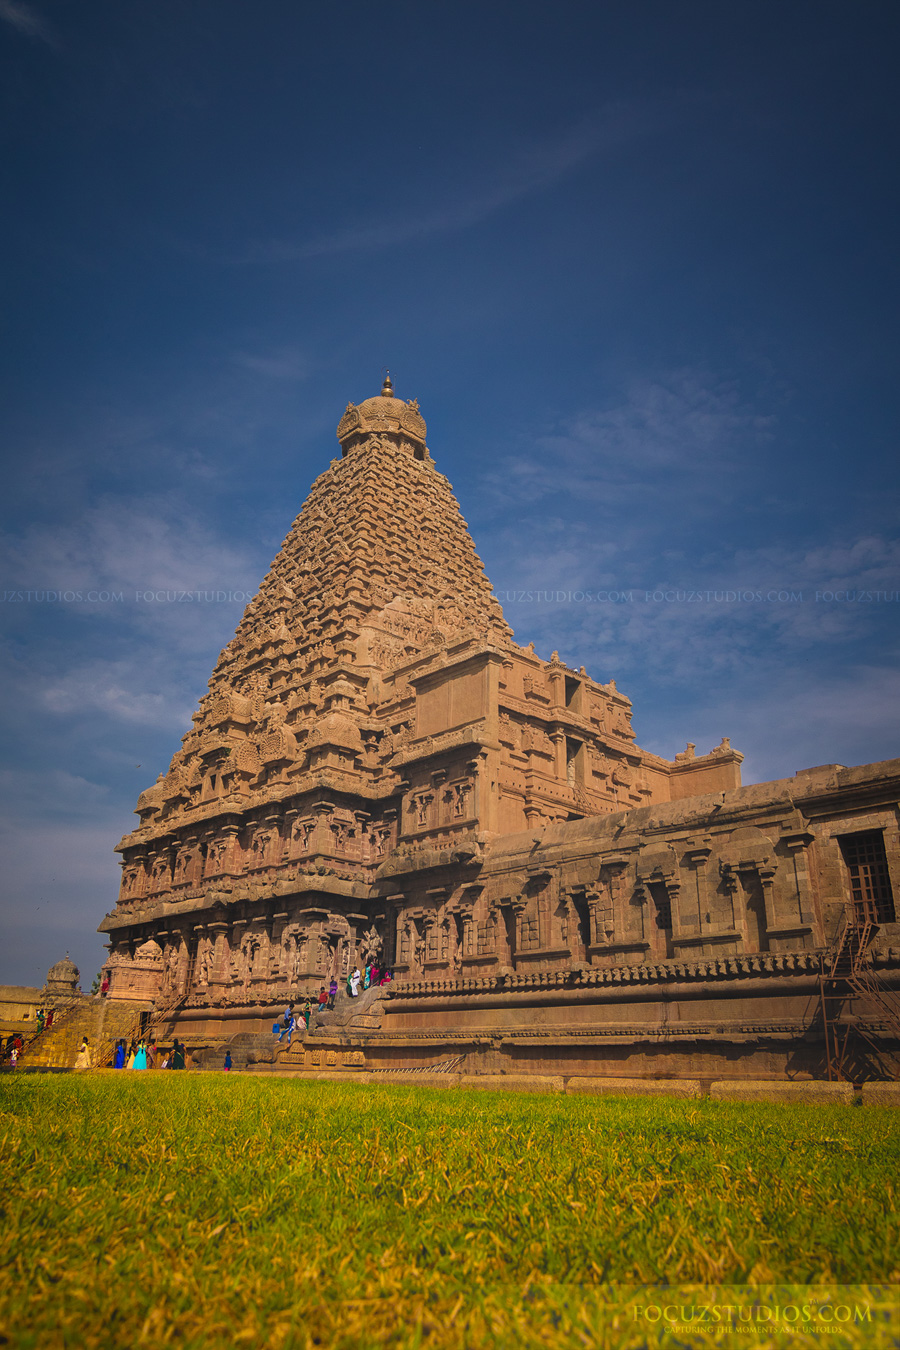 The Brahadeeshwara Temple